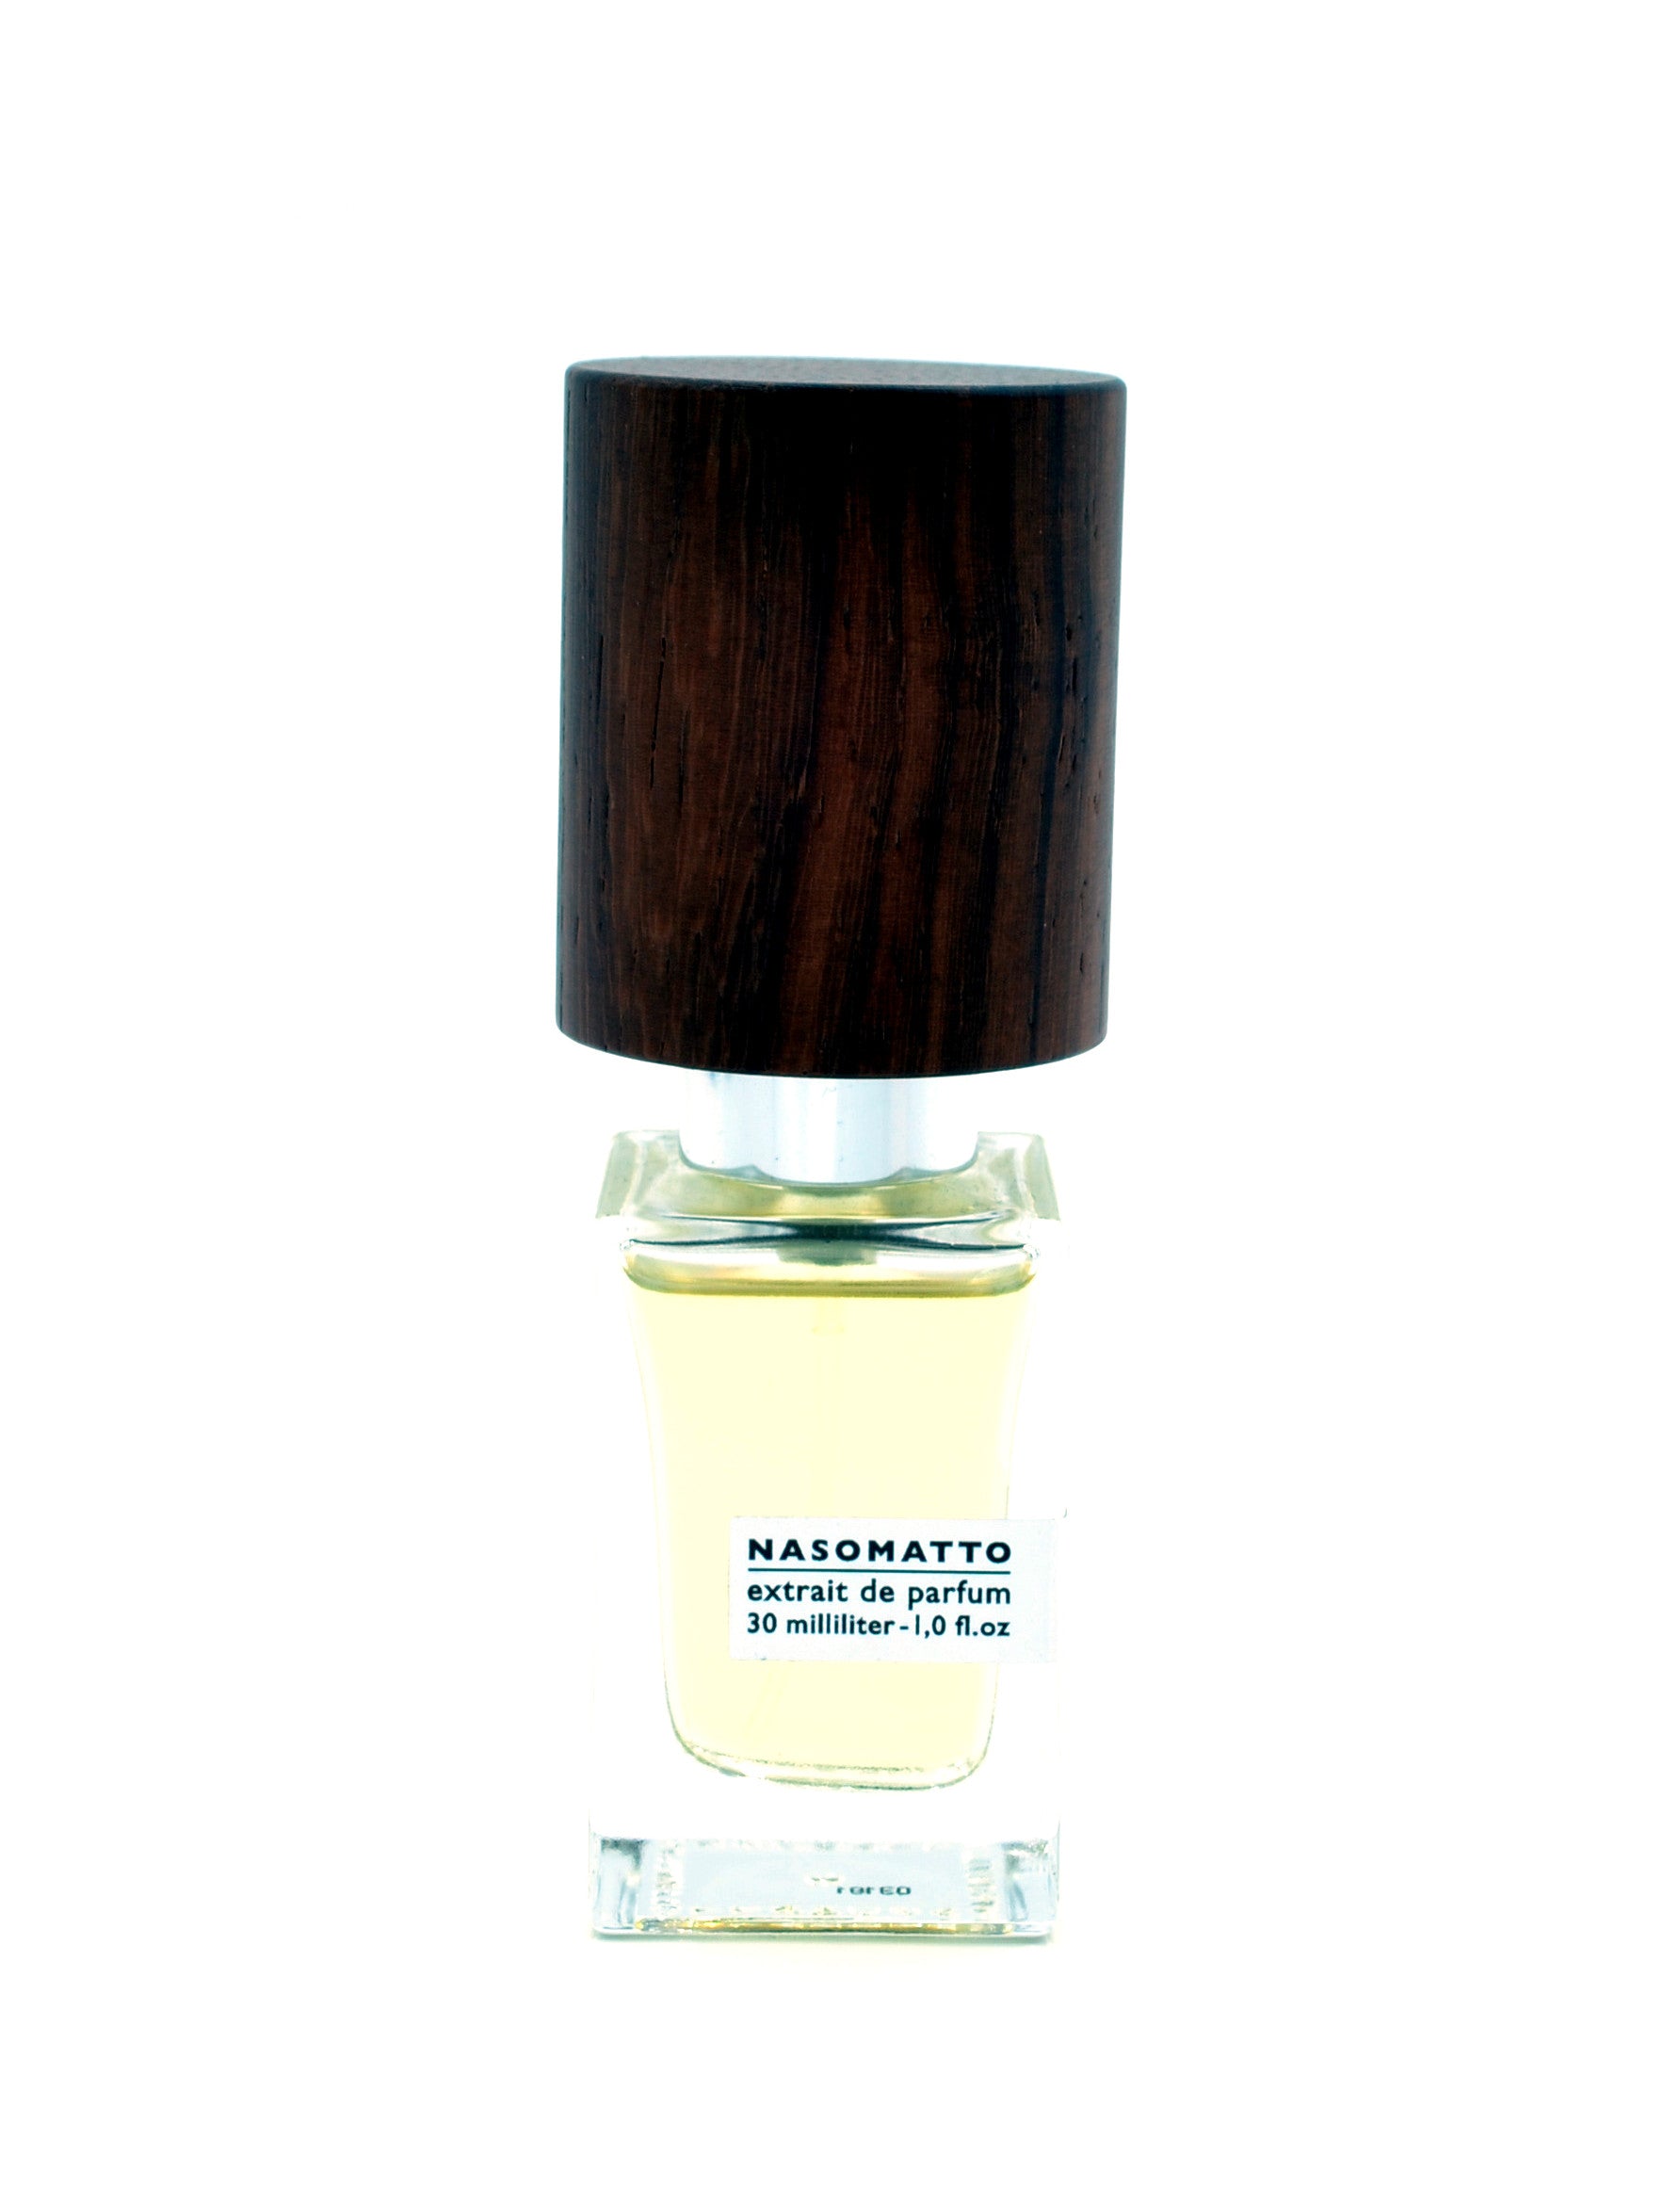 Perfume NUDIFLORUM NA0042